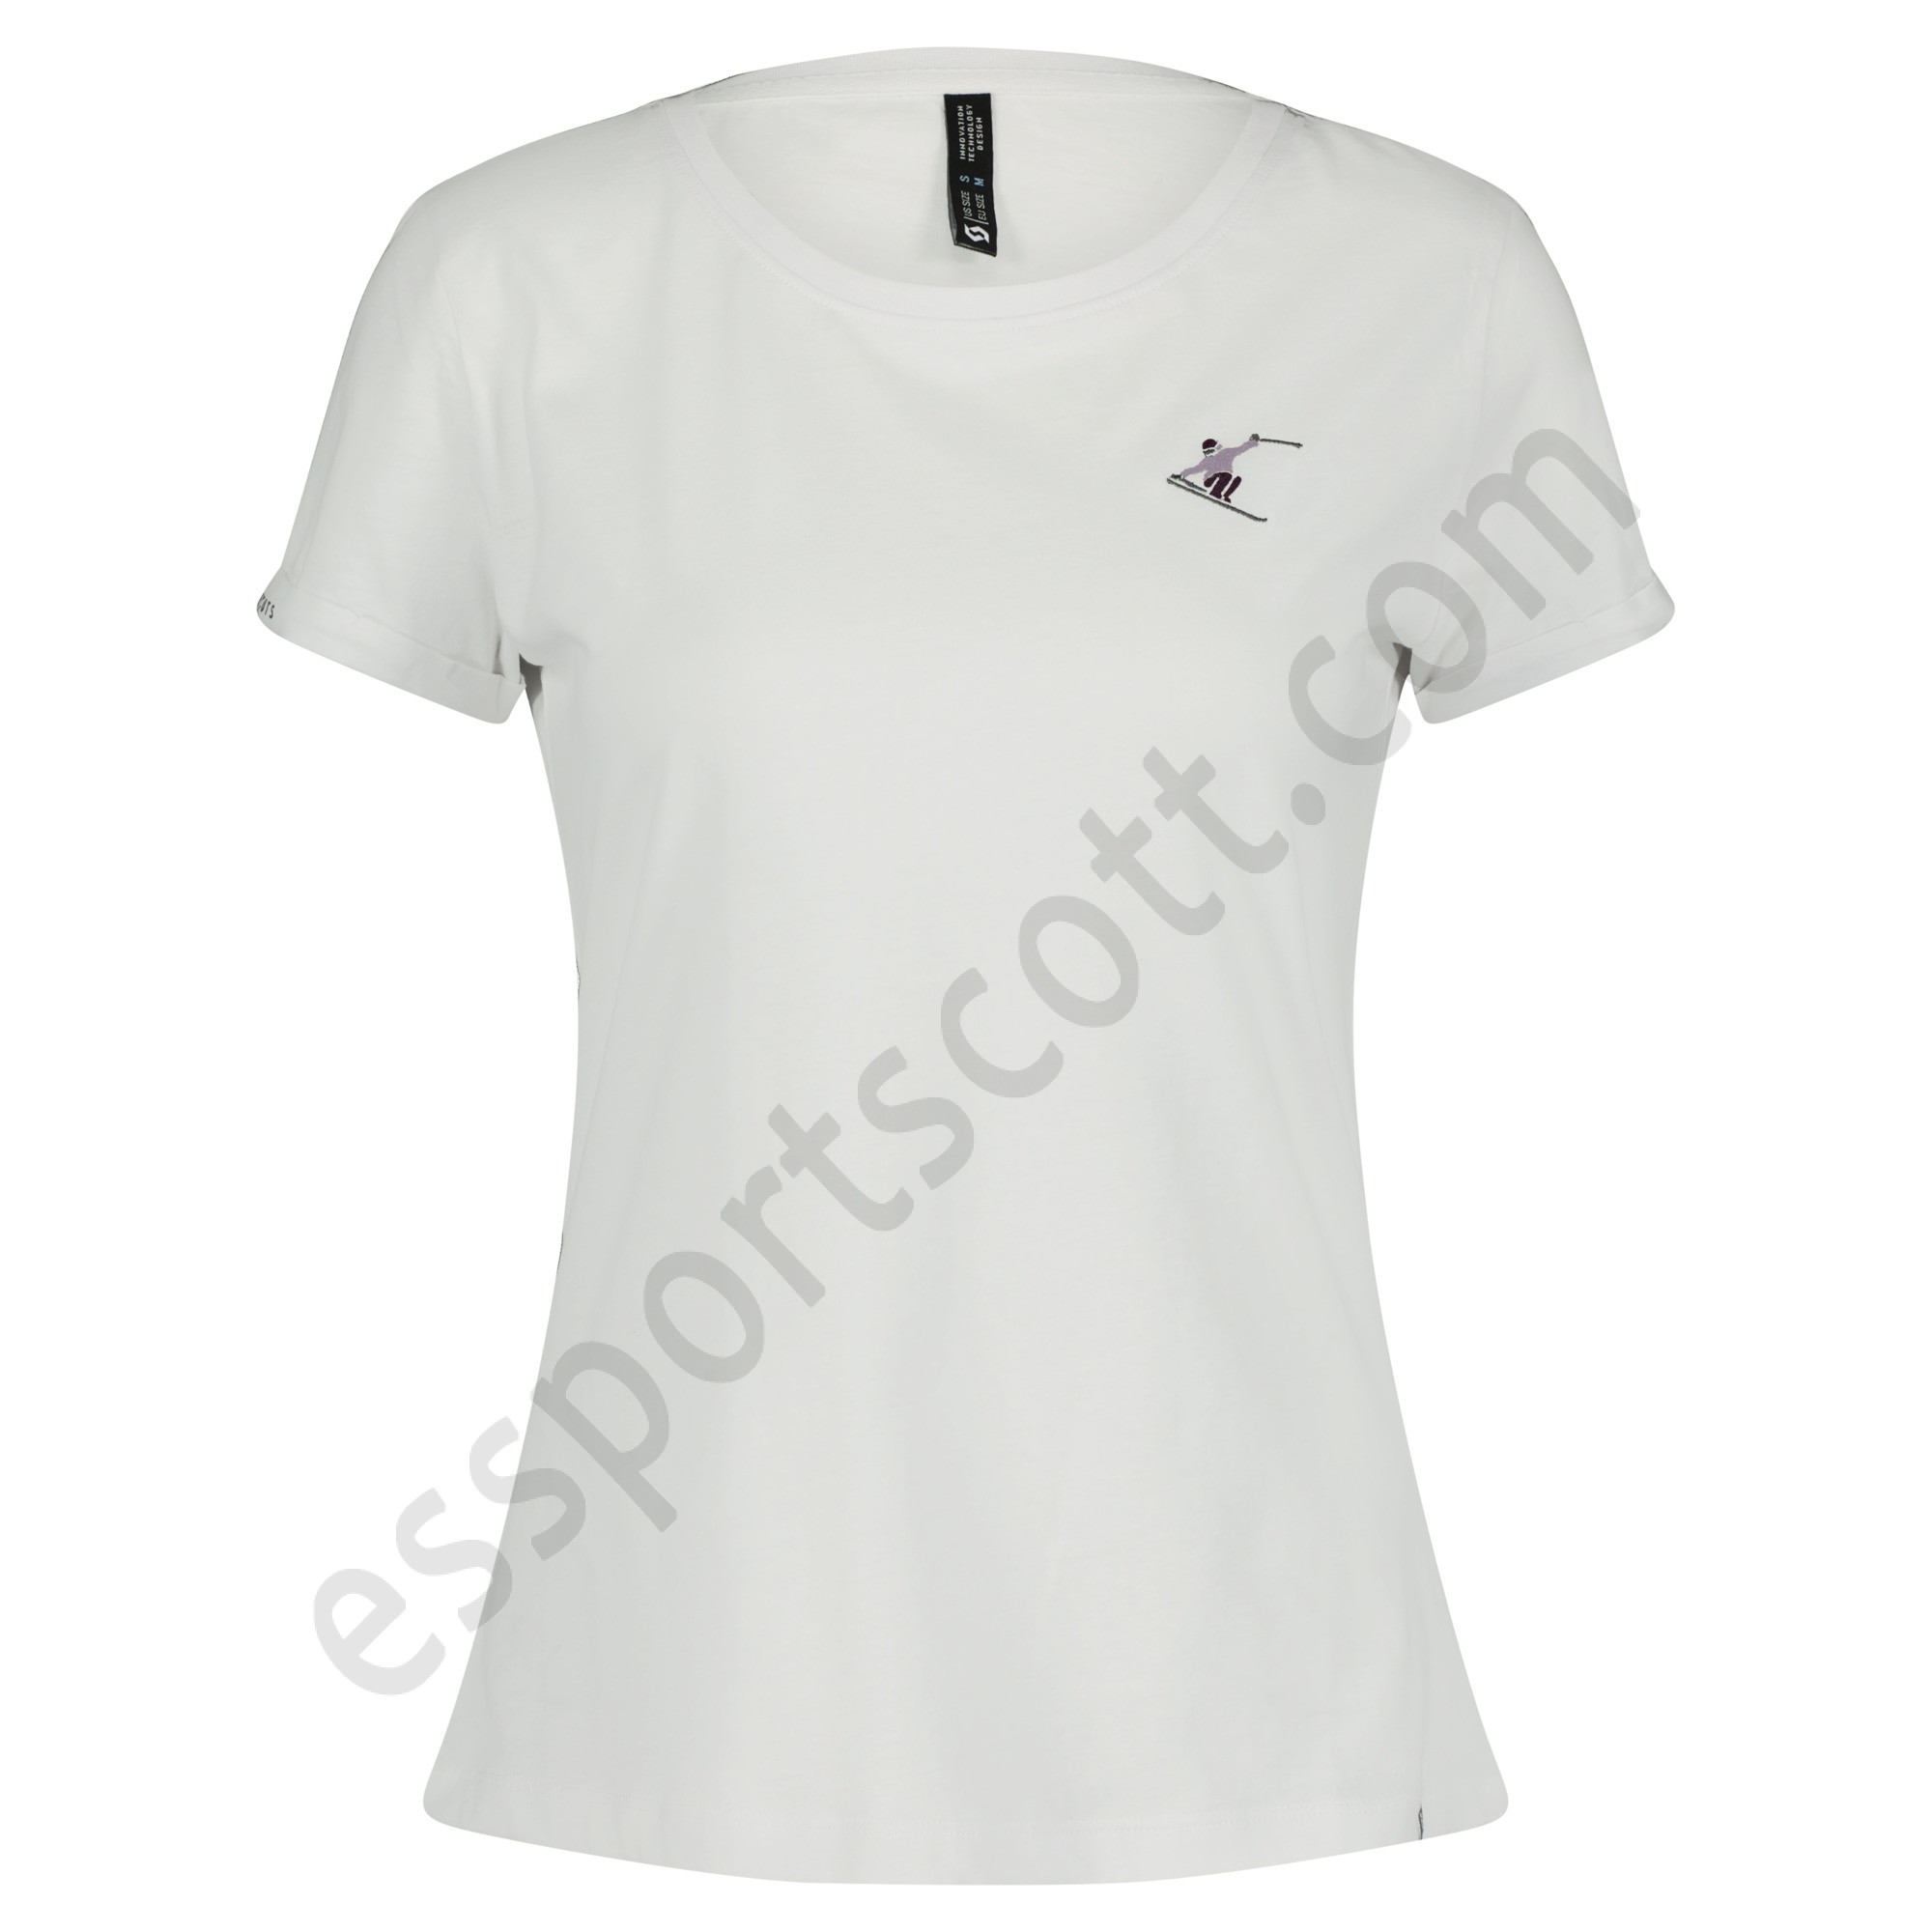 Scott Tienda ◇ Camiseta de manga corta para mujer Division - Scott Tienda ◇ Camiseta de manga corta para mujer Division